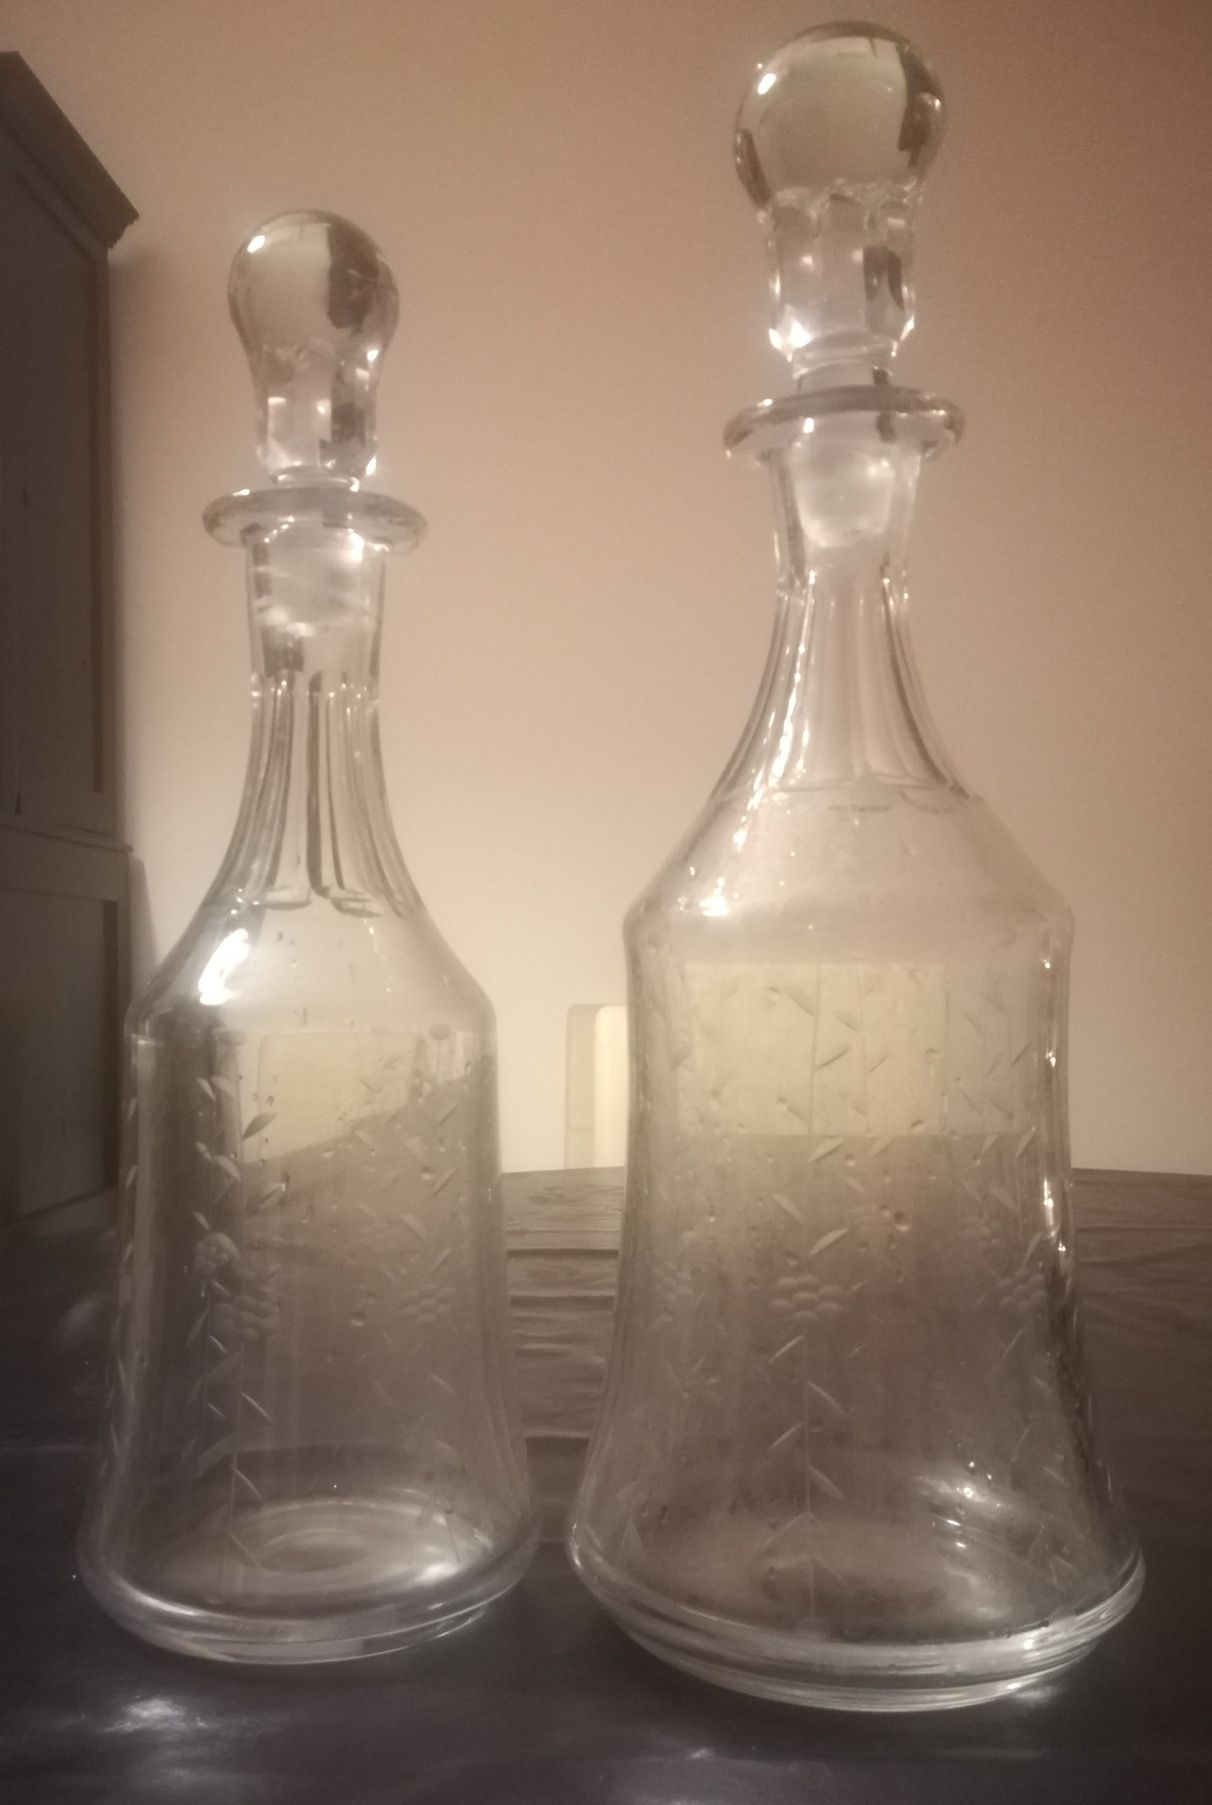 2 garrafas cristal da Marinha Grande